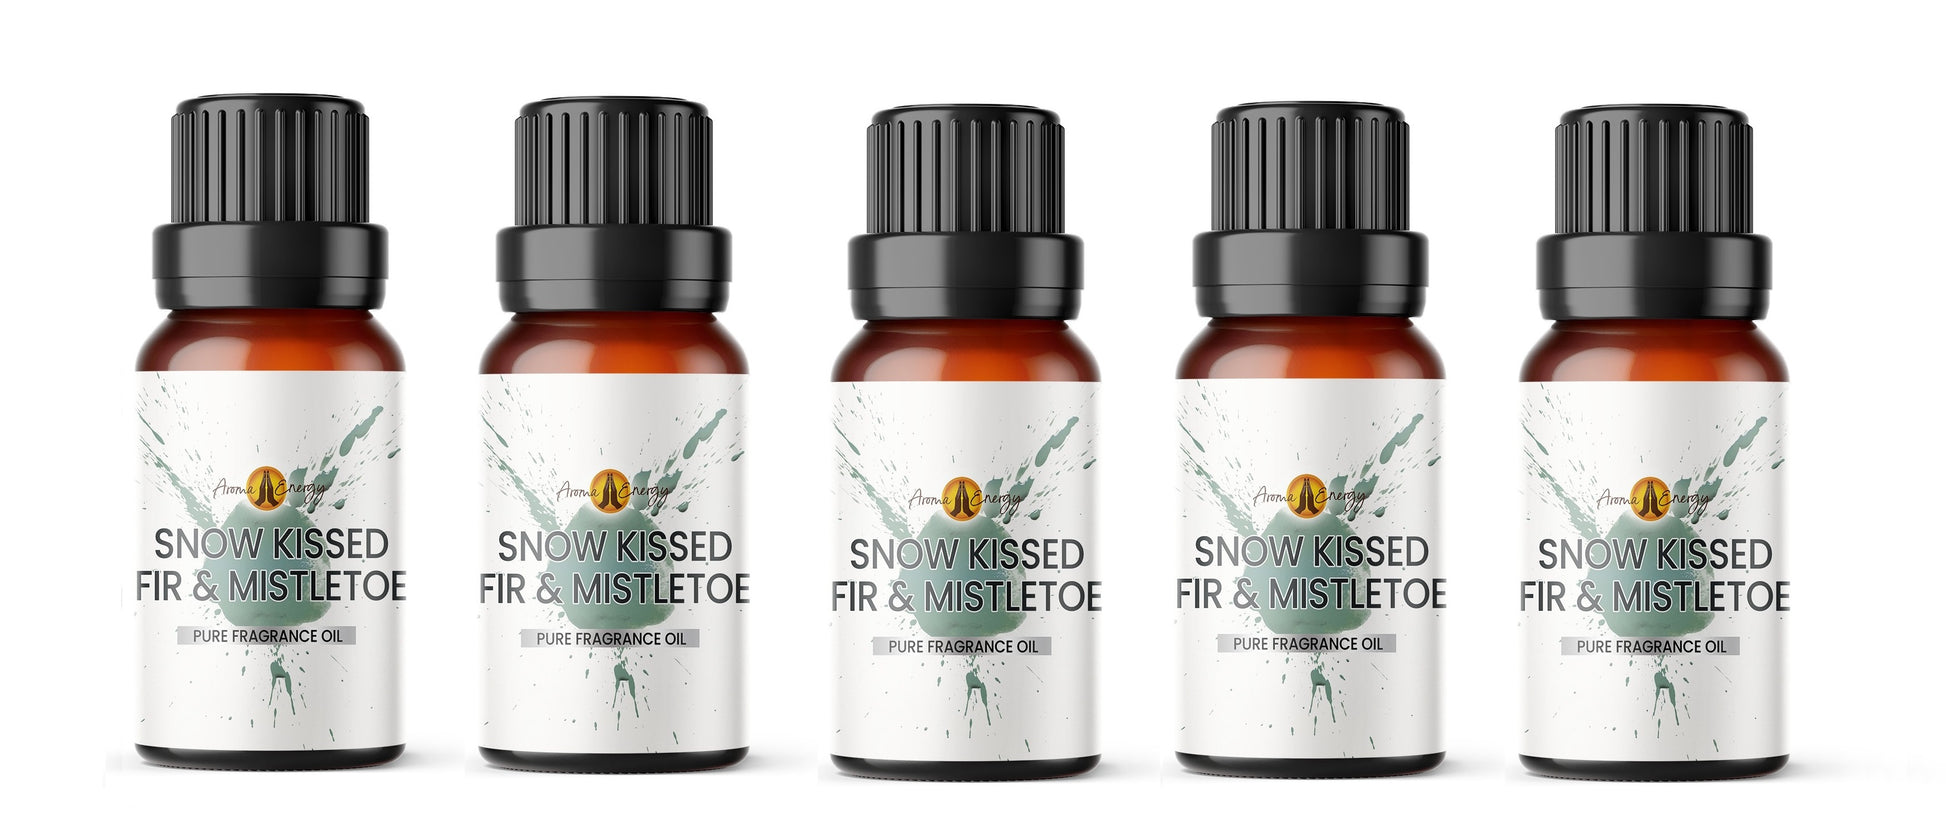 Snow Kissed Fir & Mistletoe Fragrance Oil | Christmas fragrance oil - Aroma Energy